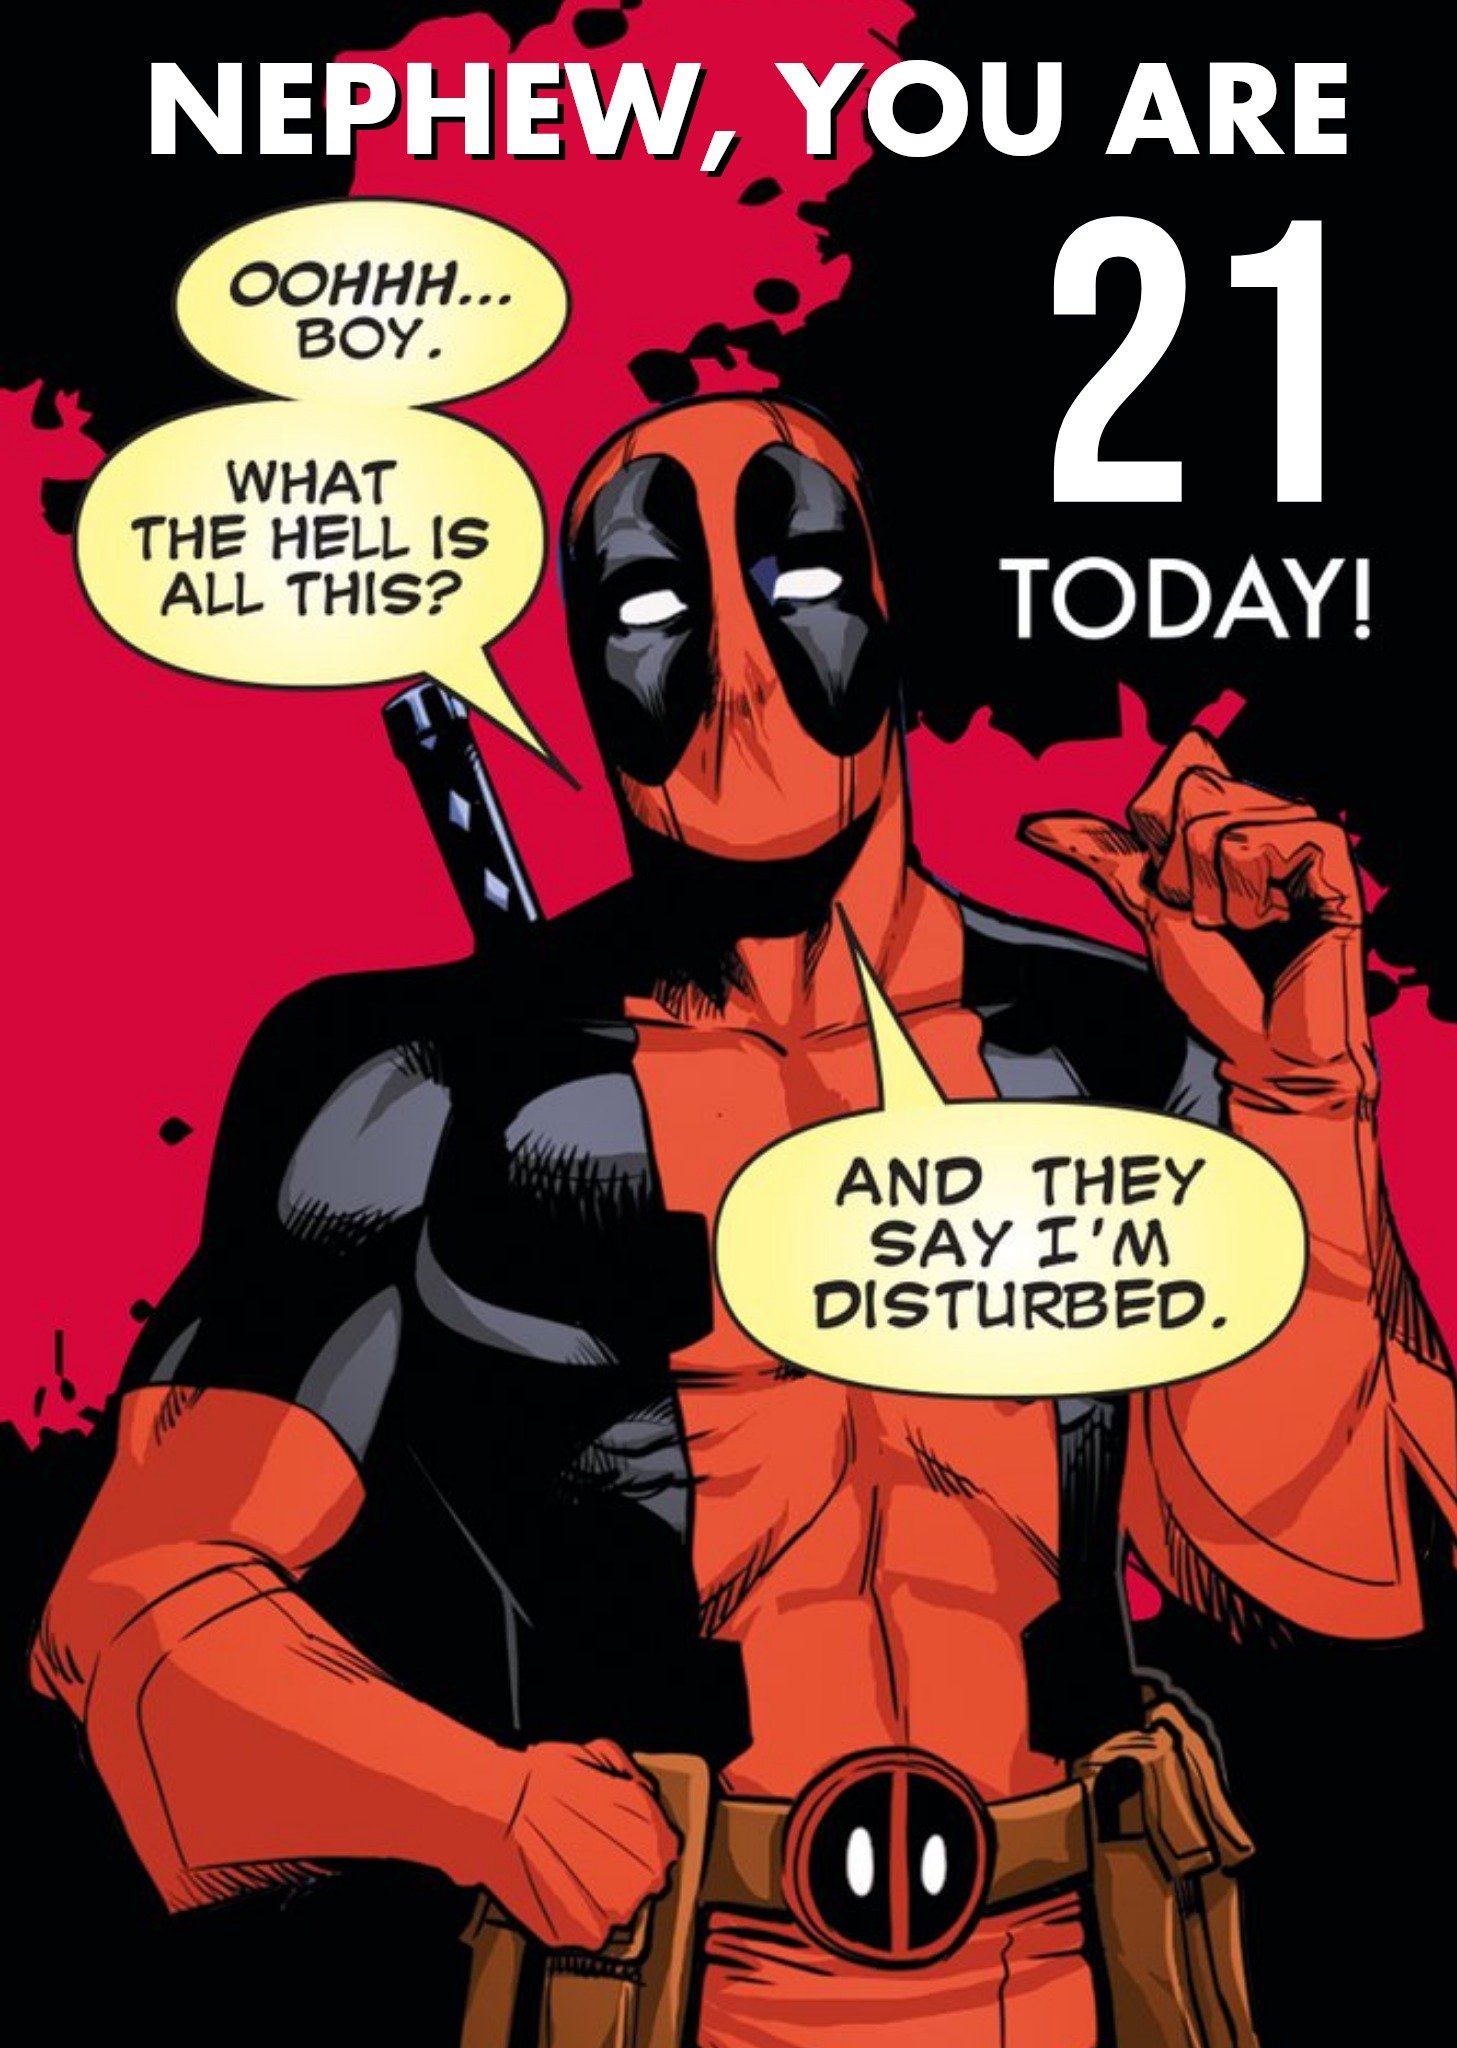 Marvel Deadpool 21 Today Nephew Birthday Card Ecard